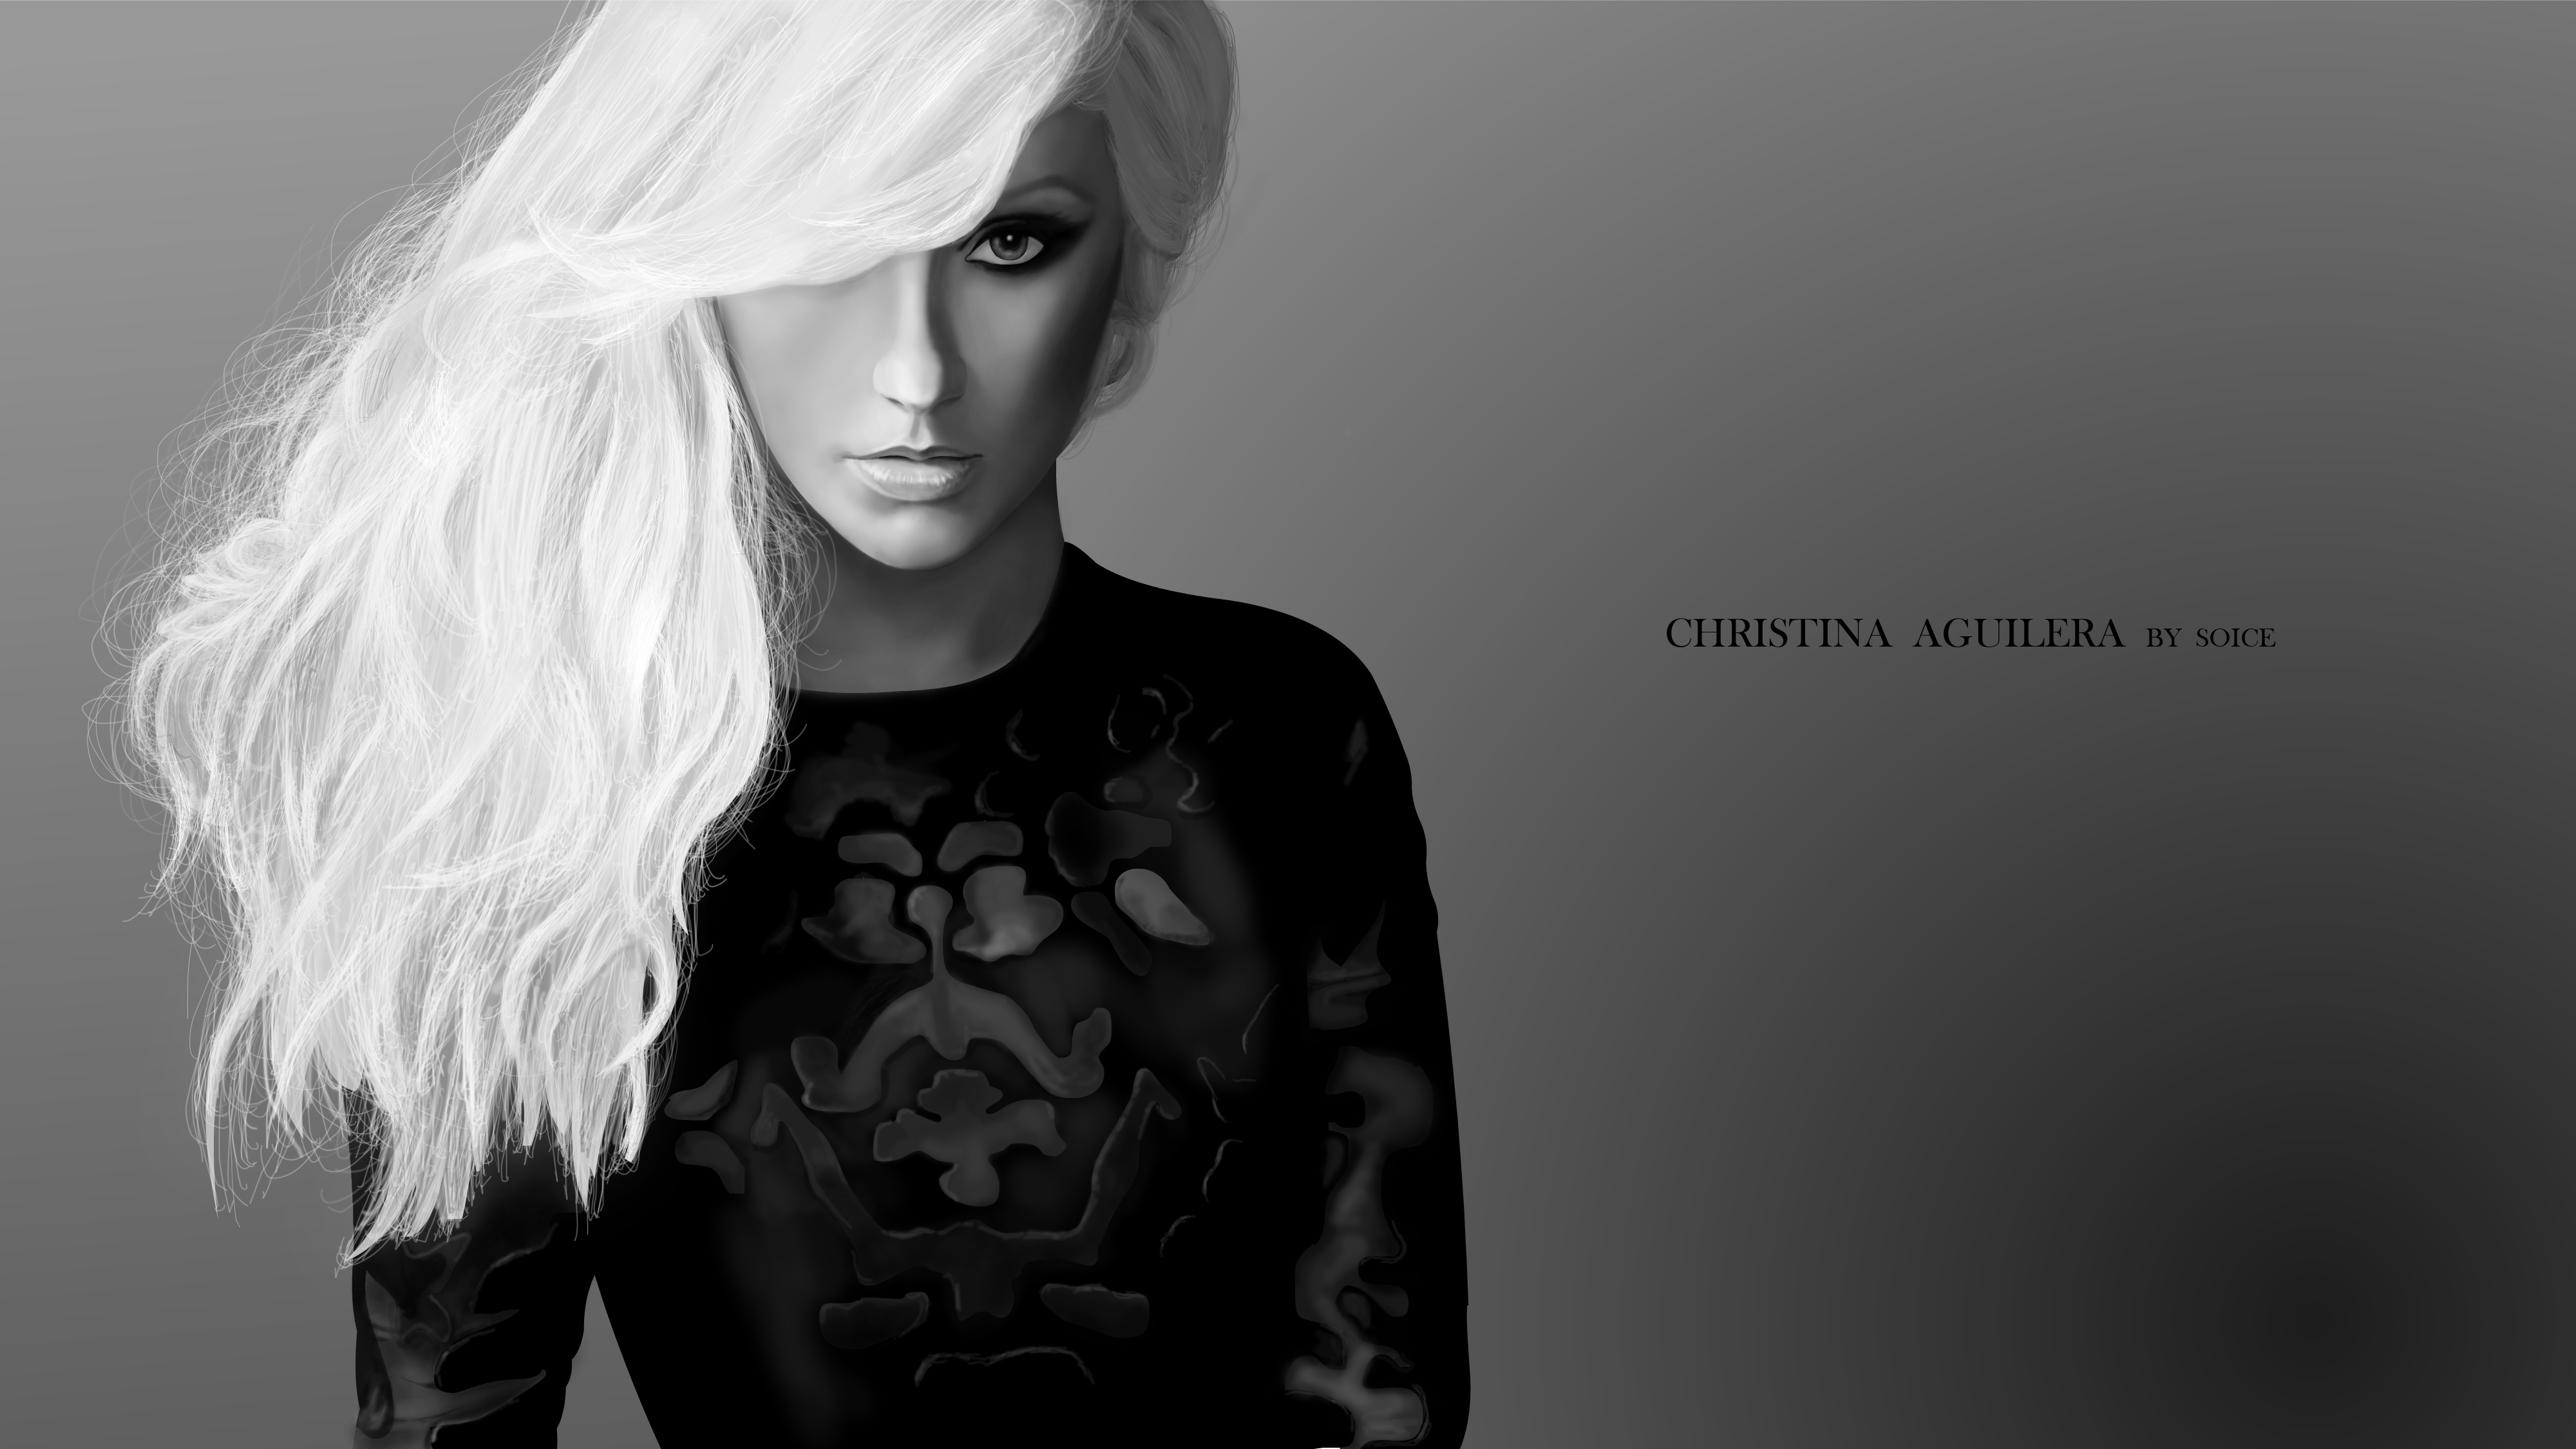 Christina Aguilera Blonde And Black HairChristina. 